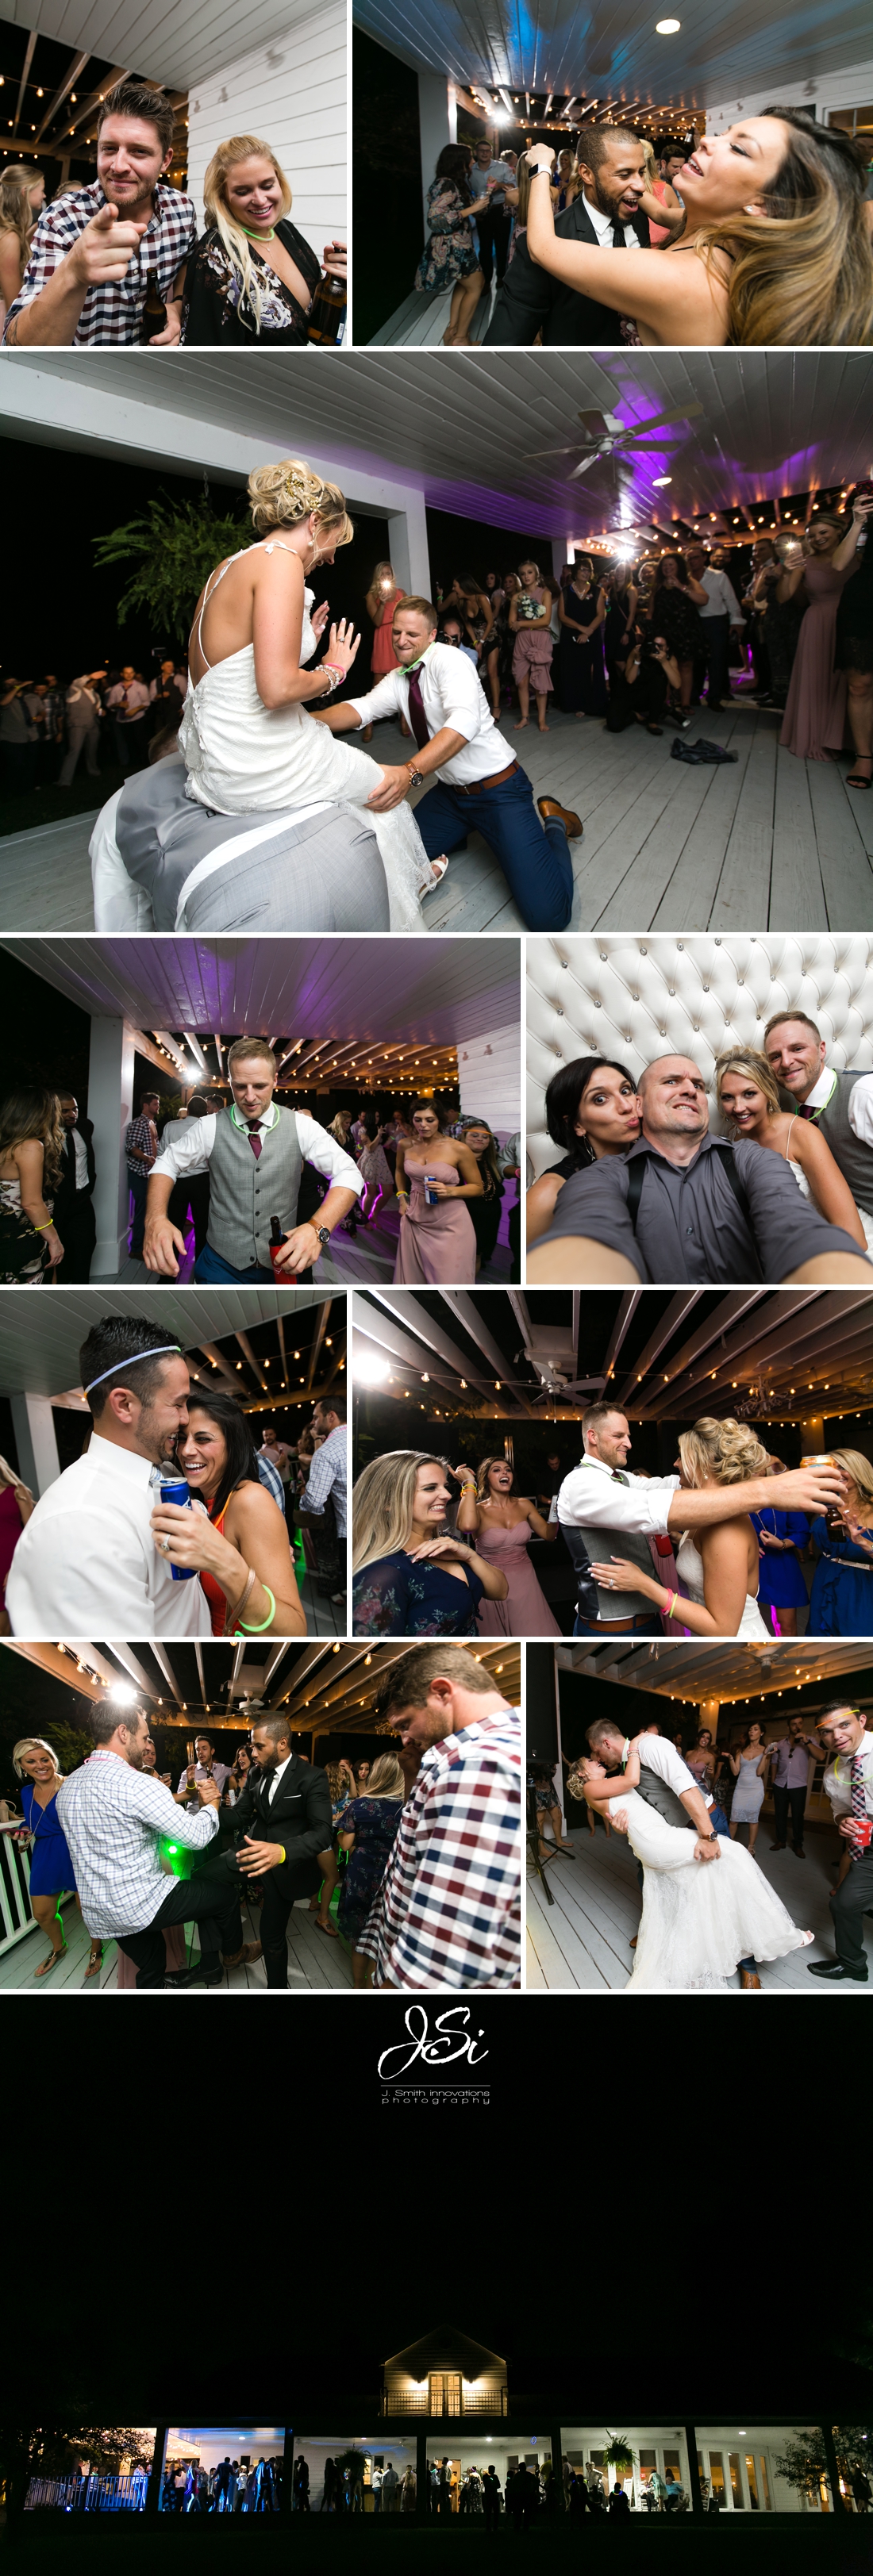 Kansas City Executive Hills Polo Club cheerful joyful wedding story photo